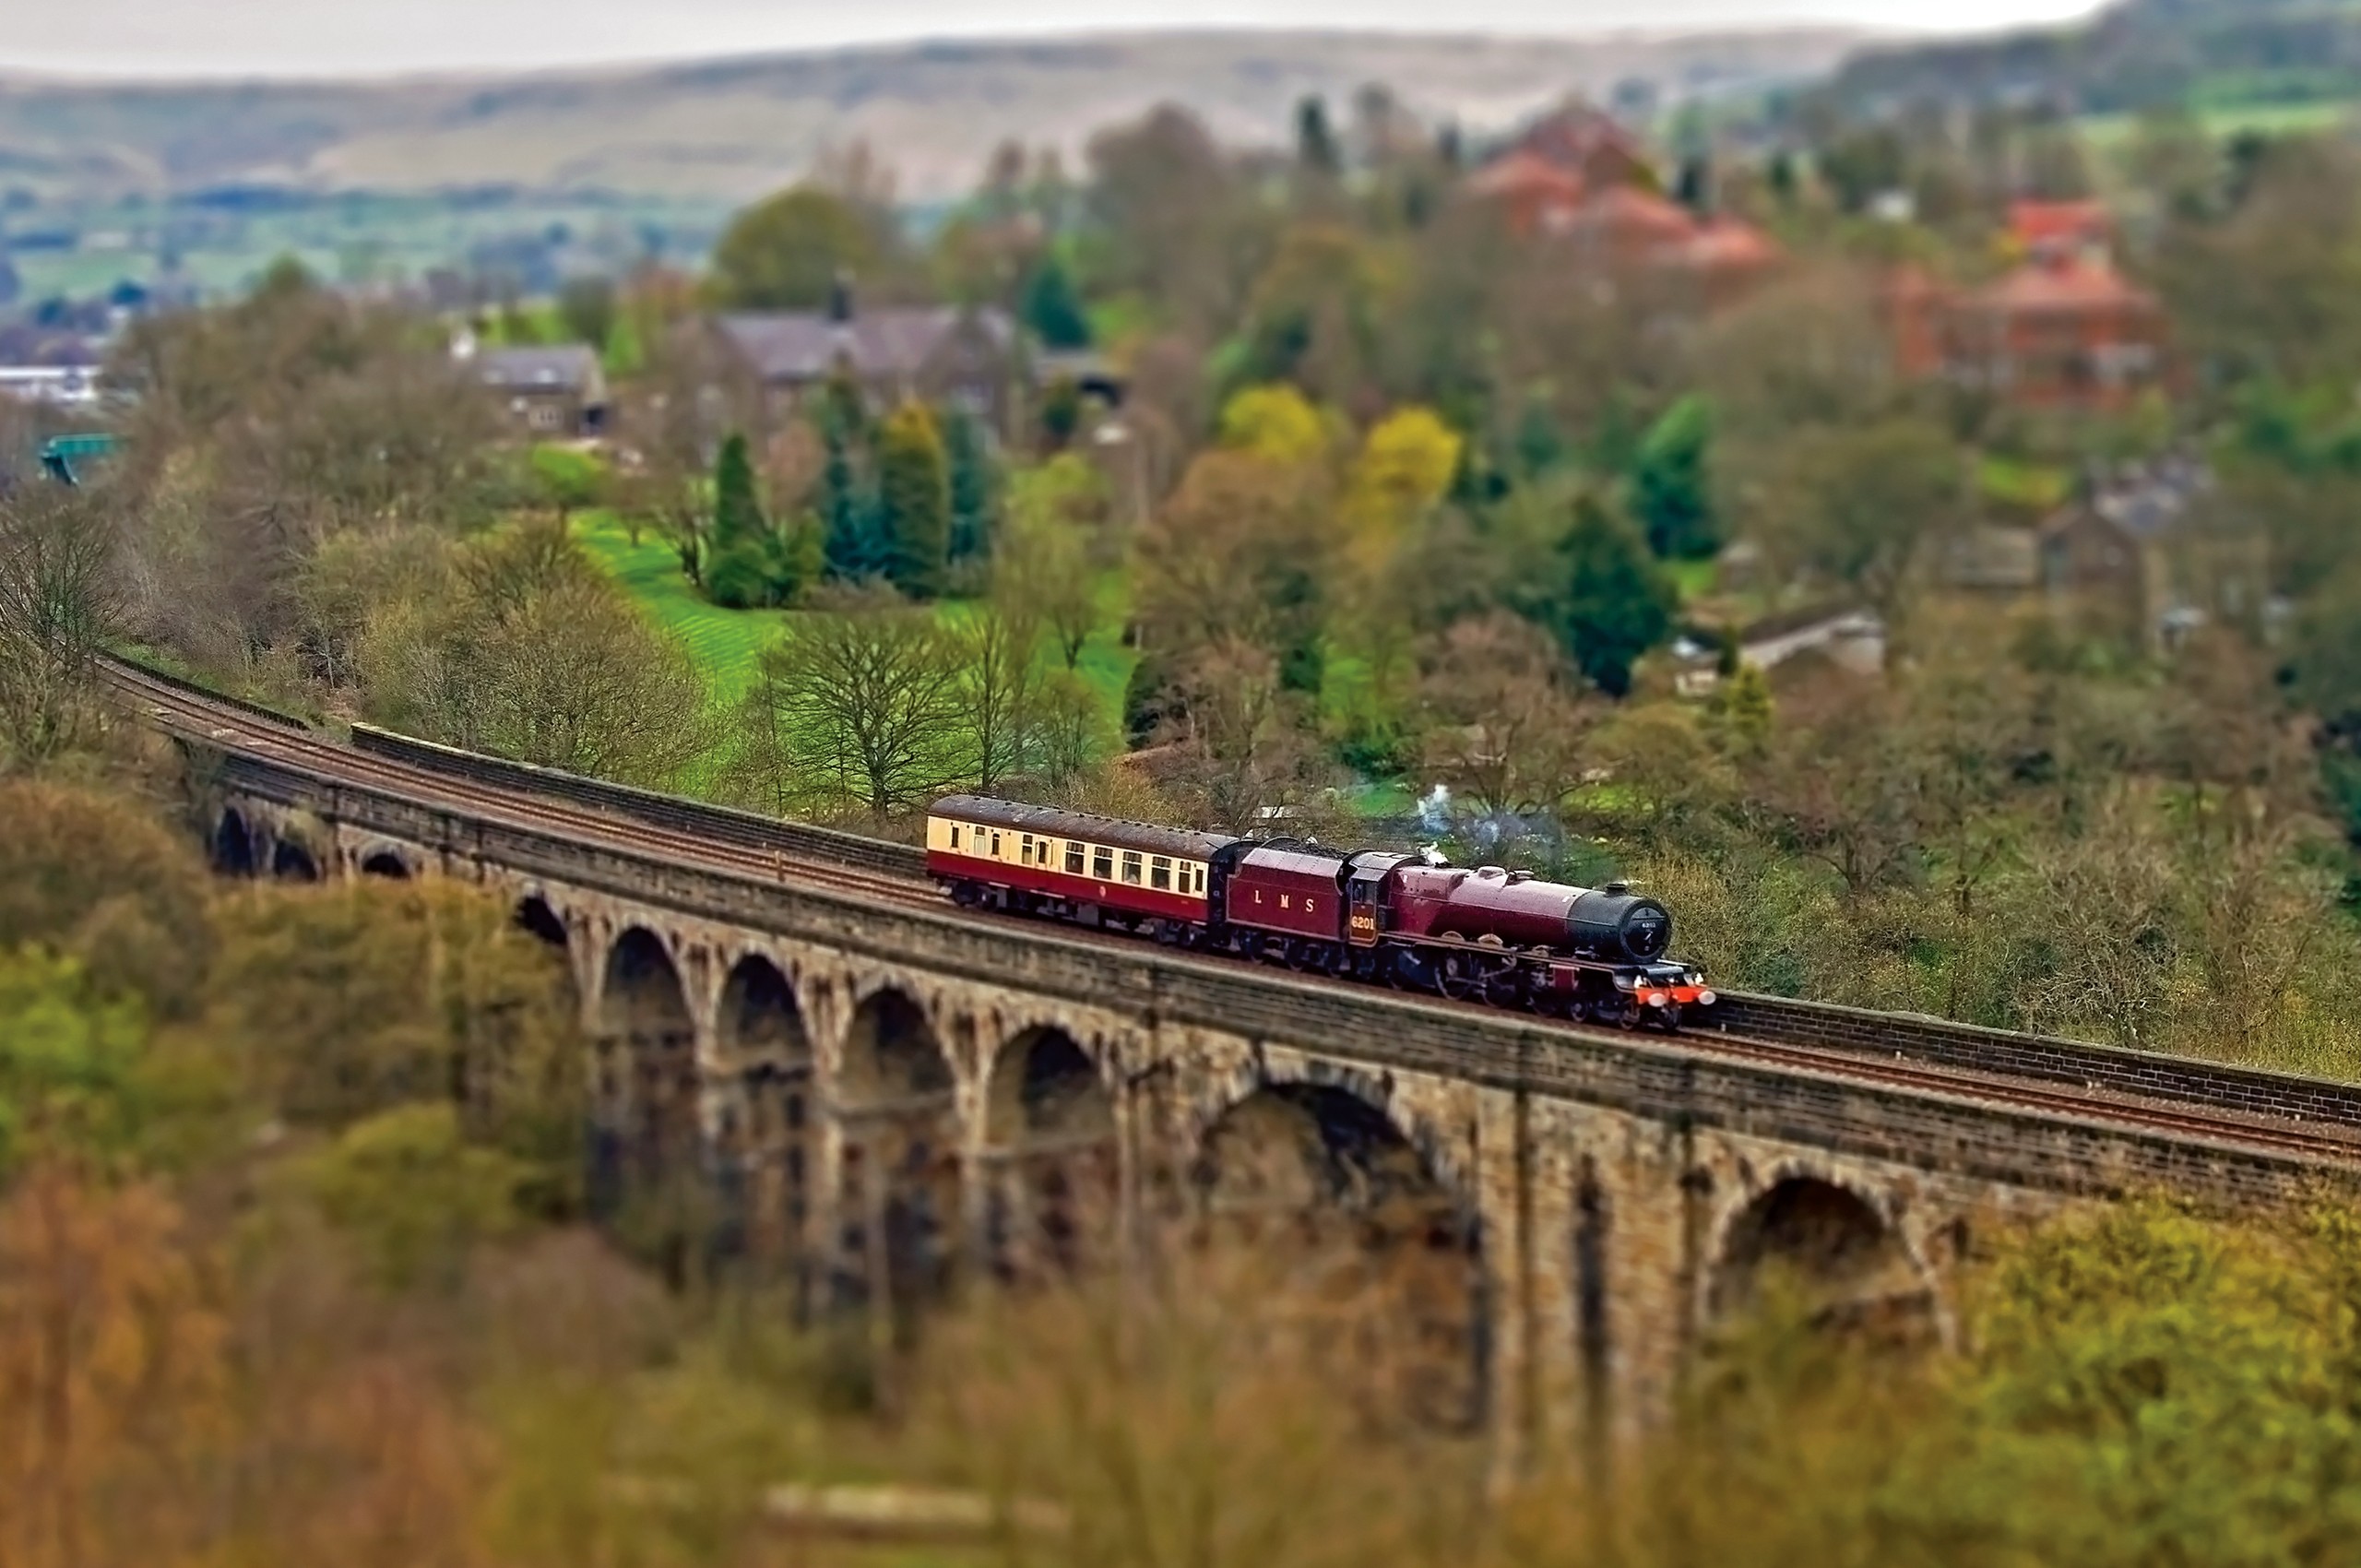 General 2560x1700 vehicle train landscape tilt shift viaduct railway bridge steam locomotive